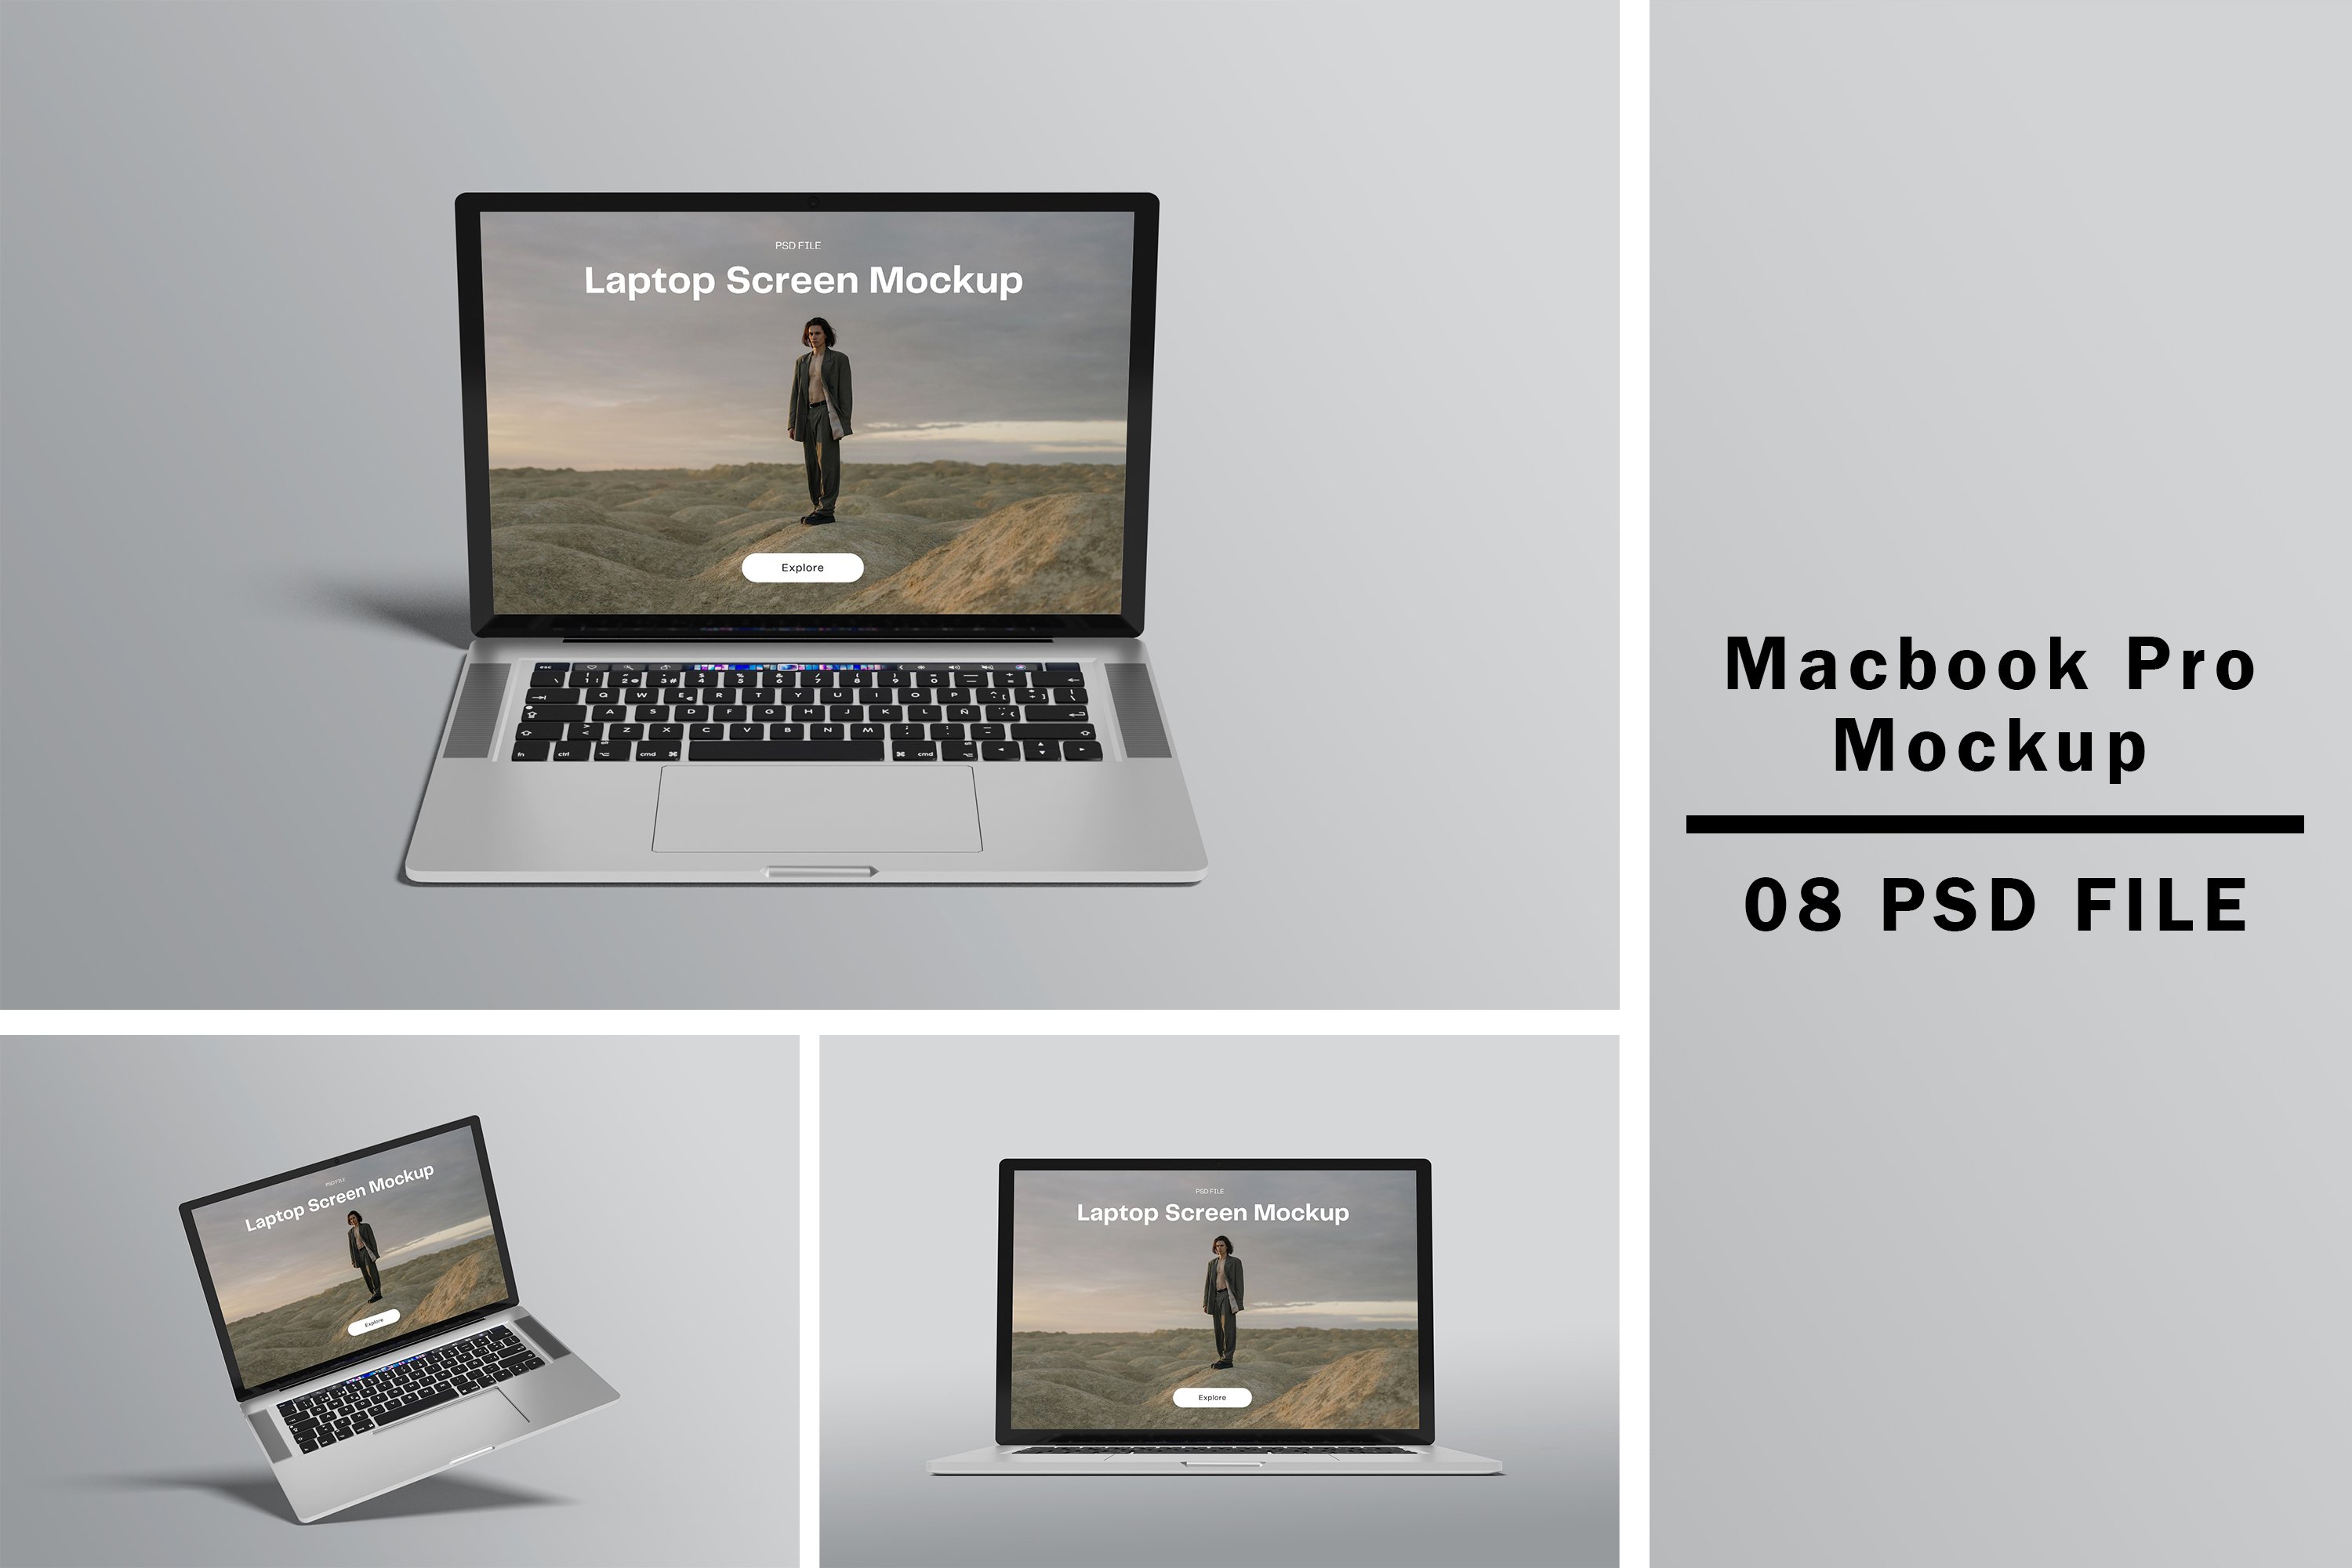 Macbook Pro Mockups cover image.